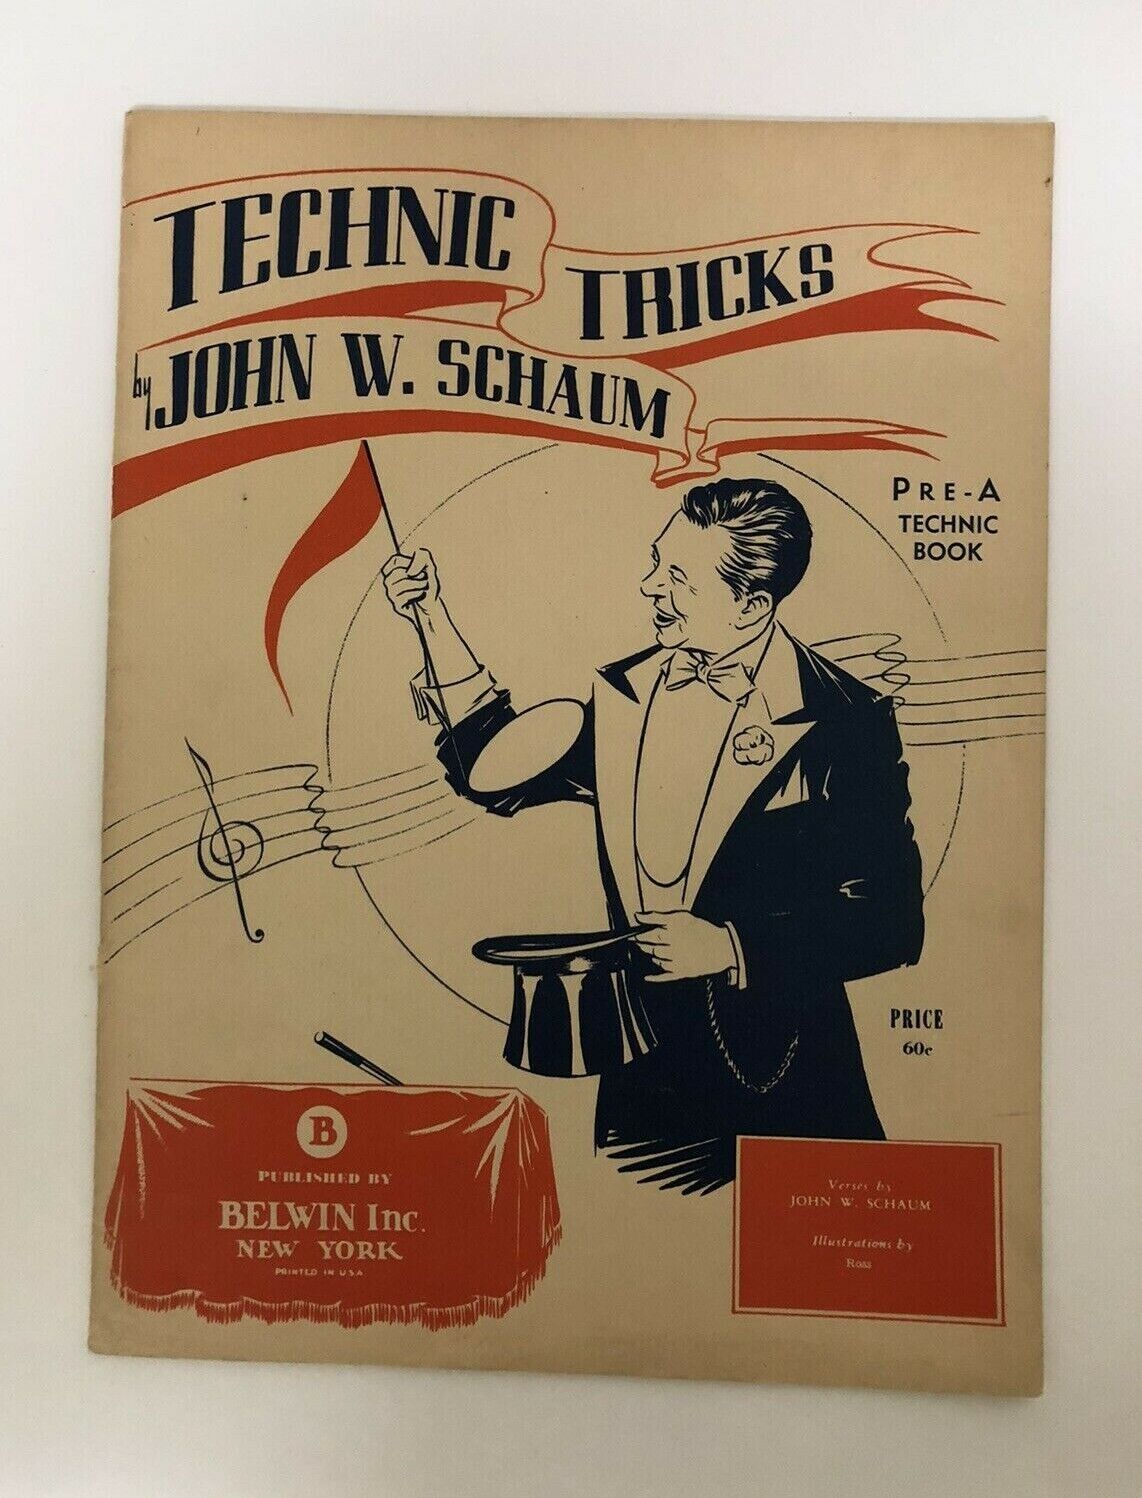 Primary image for Technic Tricks Pre-A Book  1949 by John W. Schaum - Belwin Inc. New York, U.S.A.